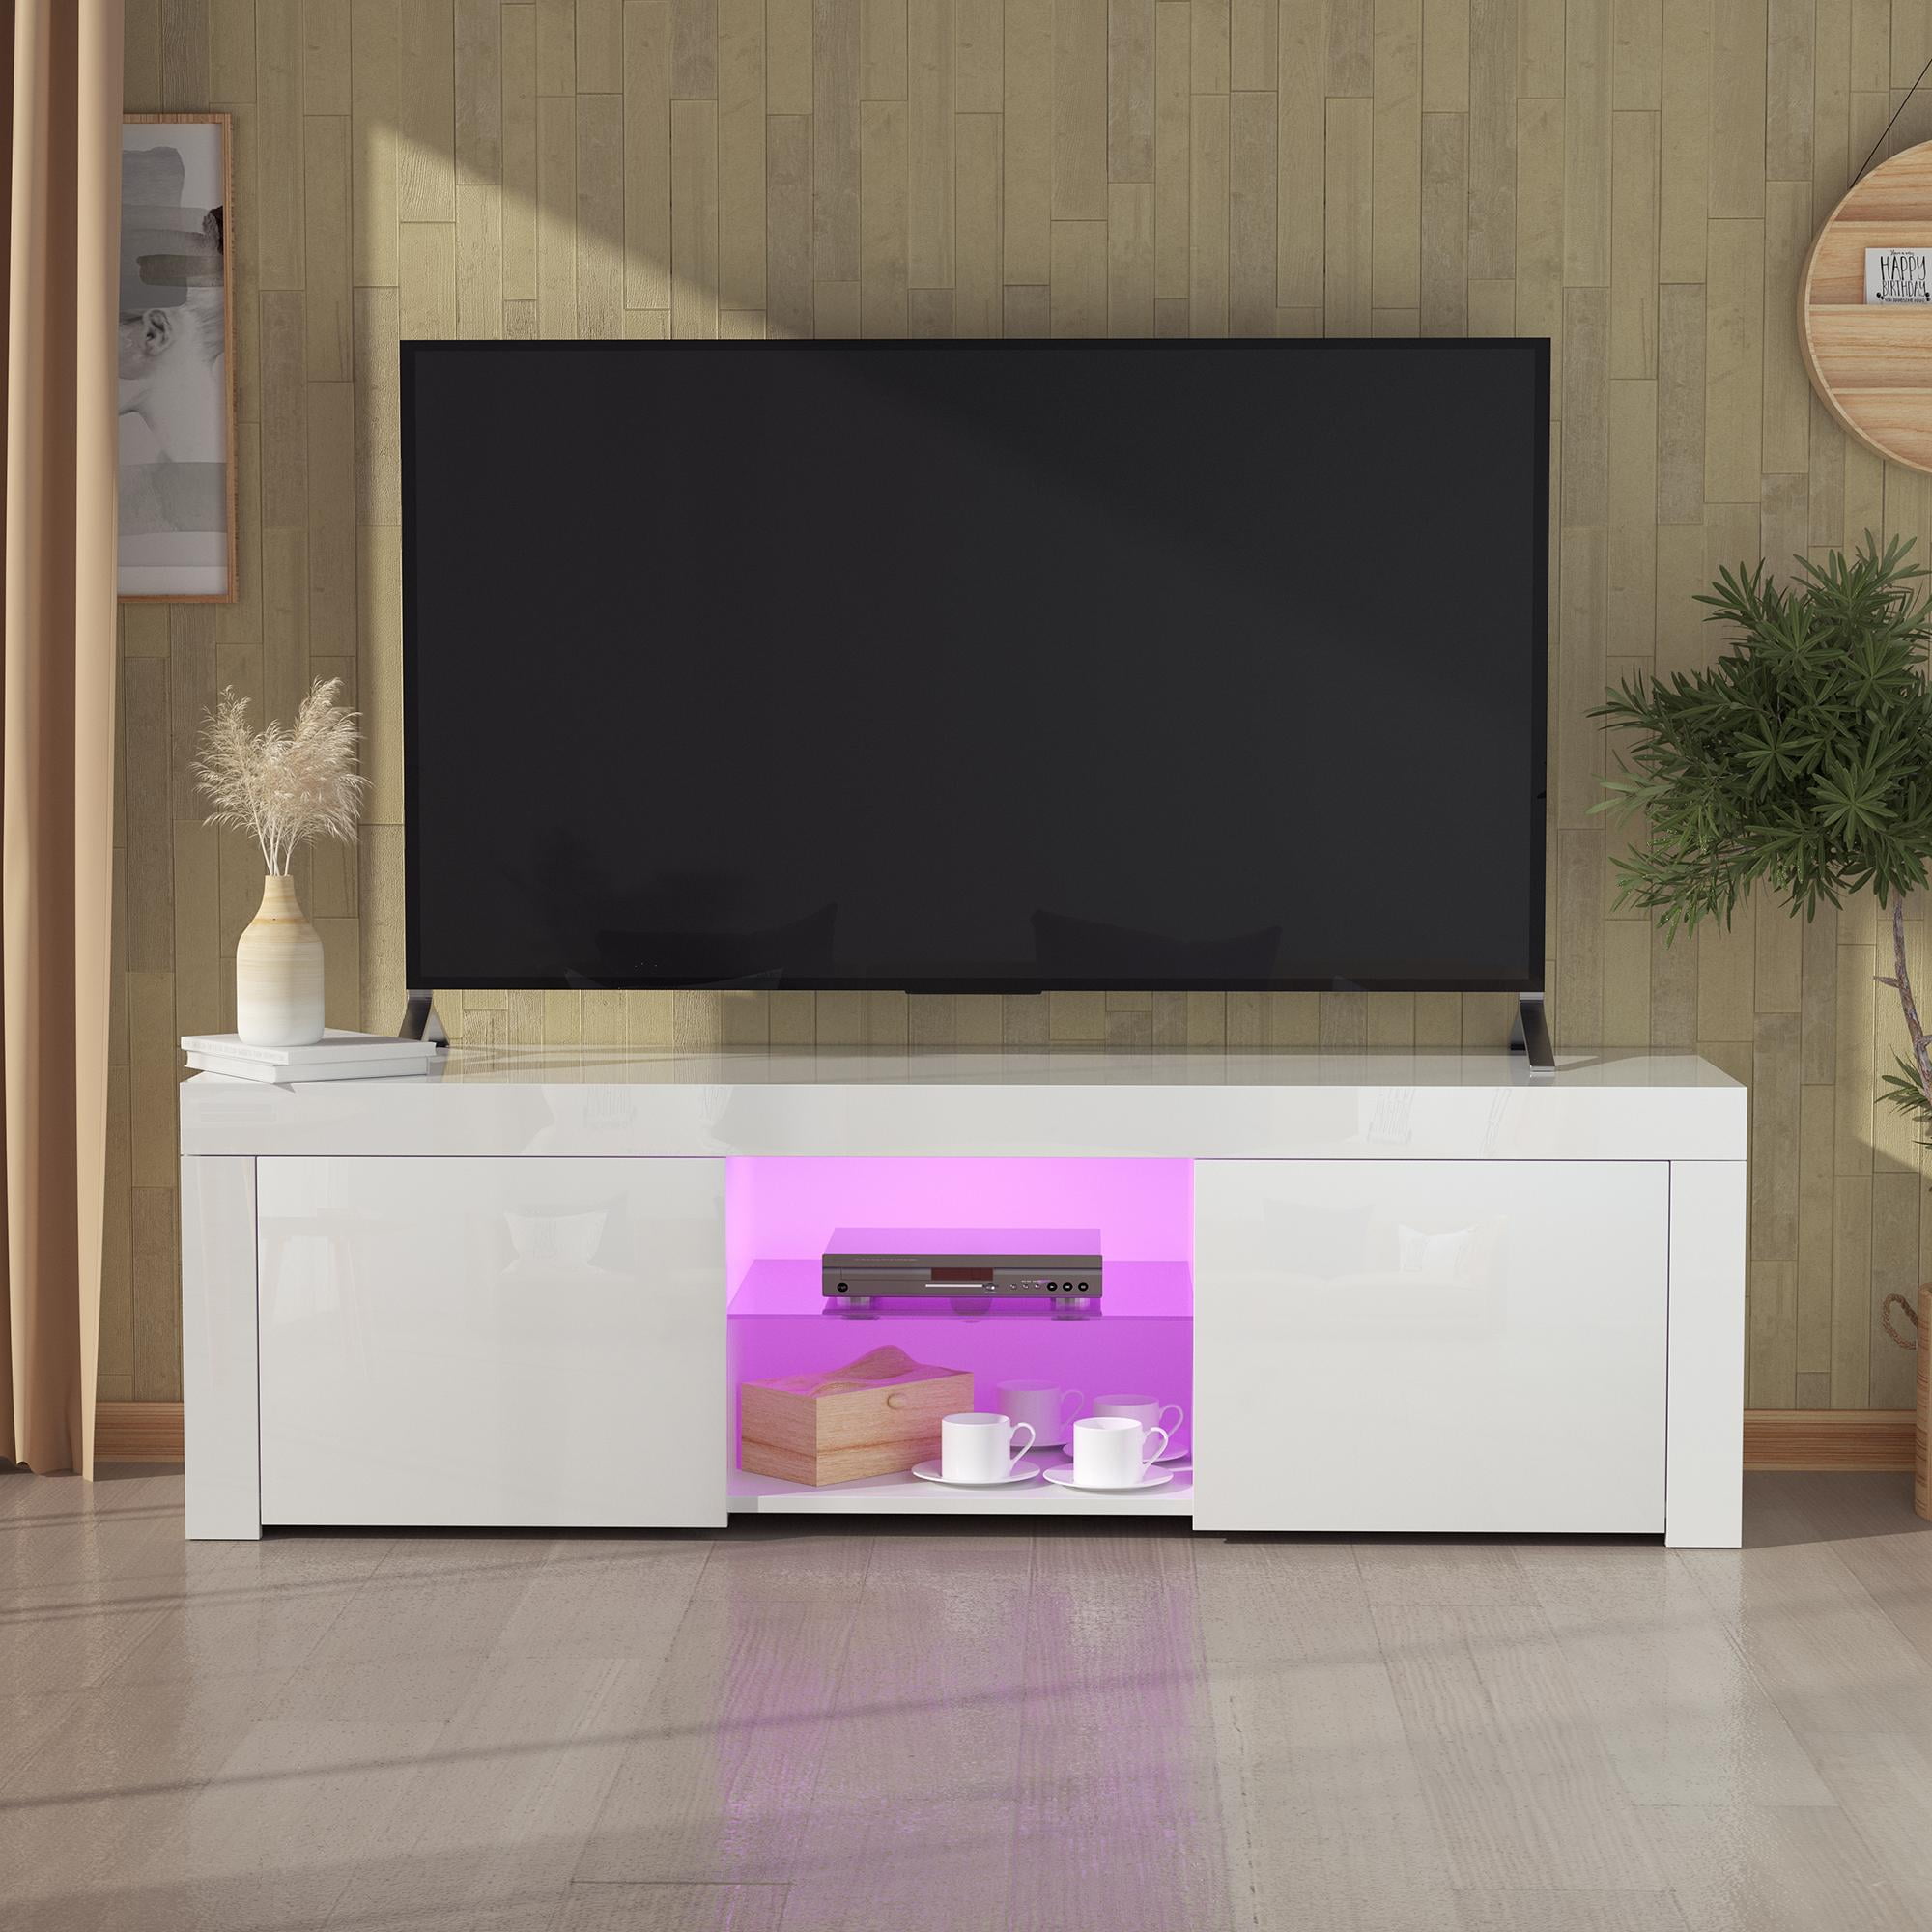 Modern TV Unit Stand Cabinet High Gloss Doors and Matt Body RGB LED Light Option 